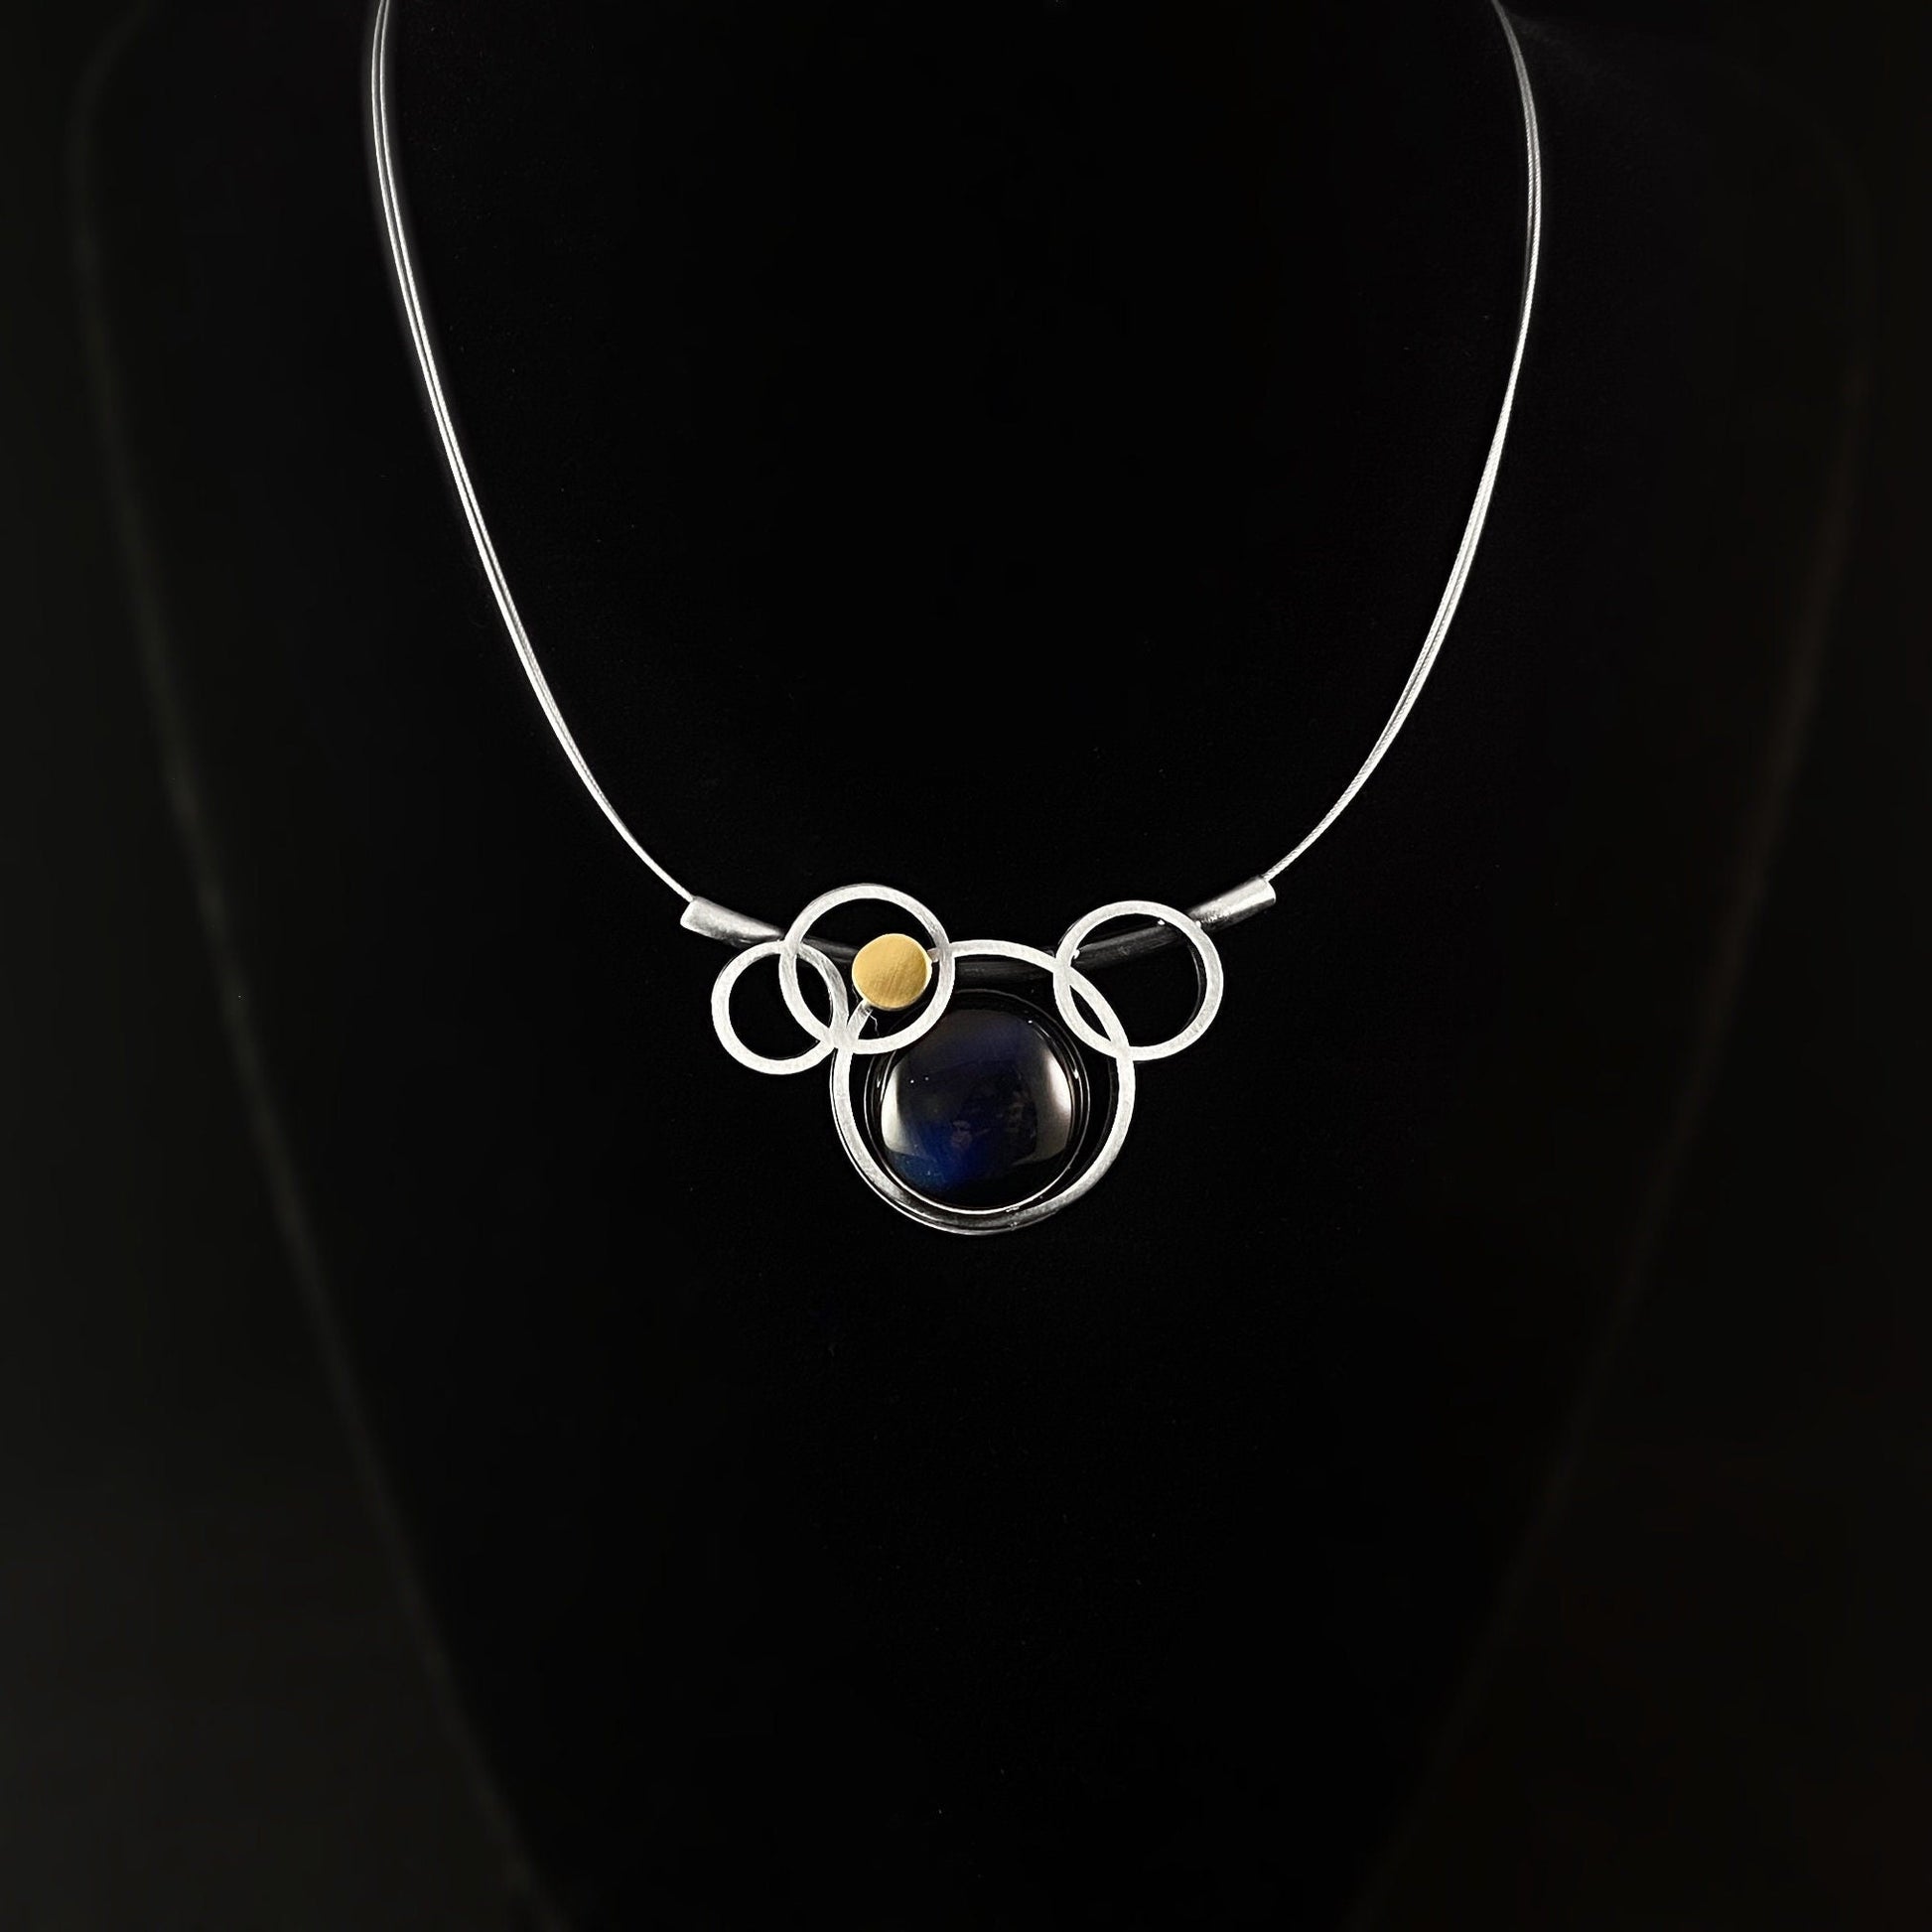 Lightweight Handmade Geometric Aluminum Necklace, Dark Blue Stone and Gray Bubbles